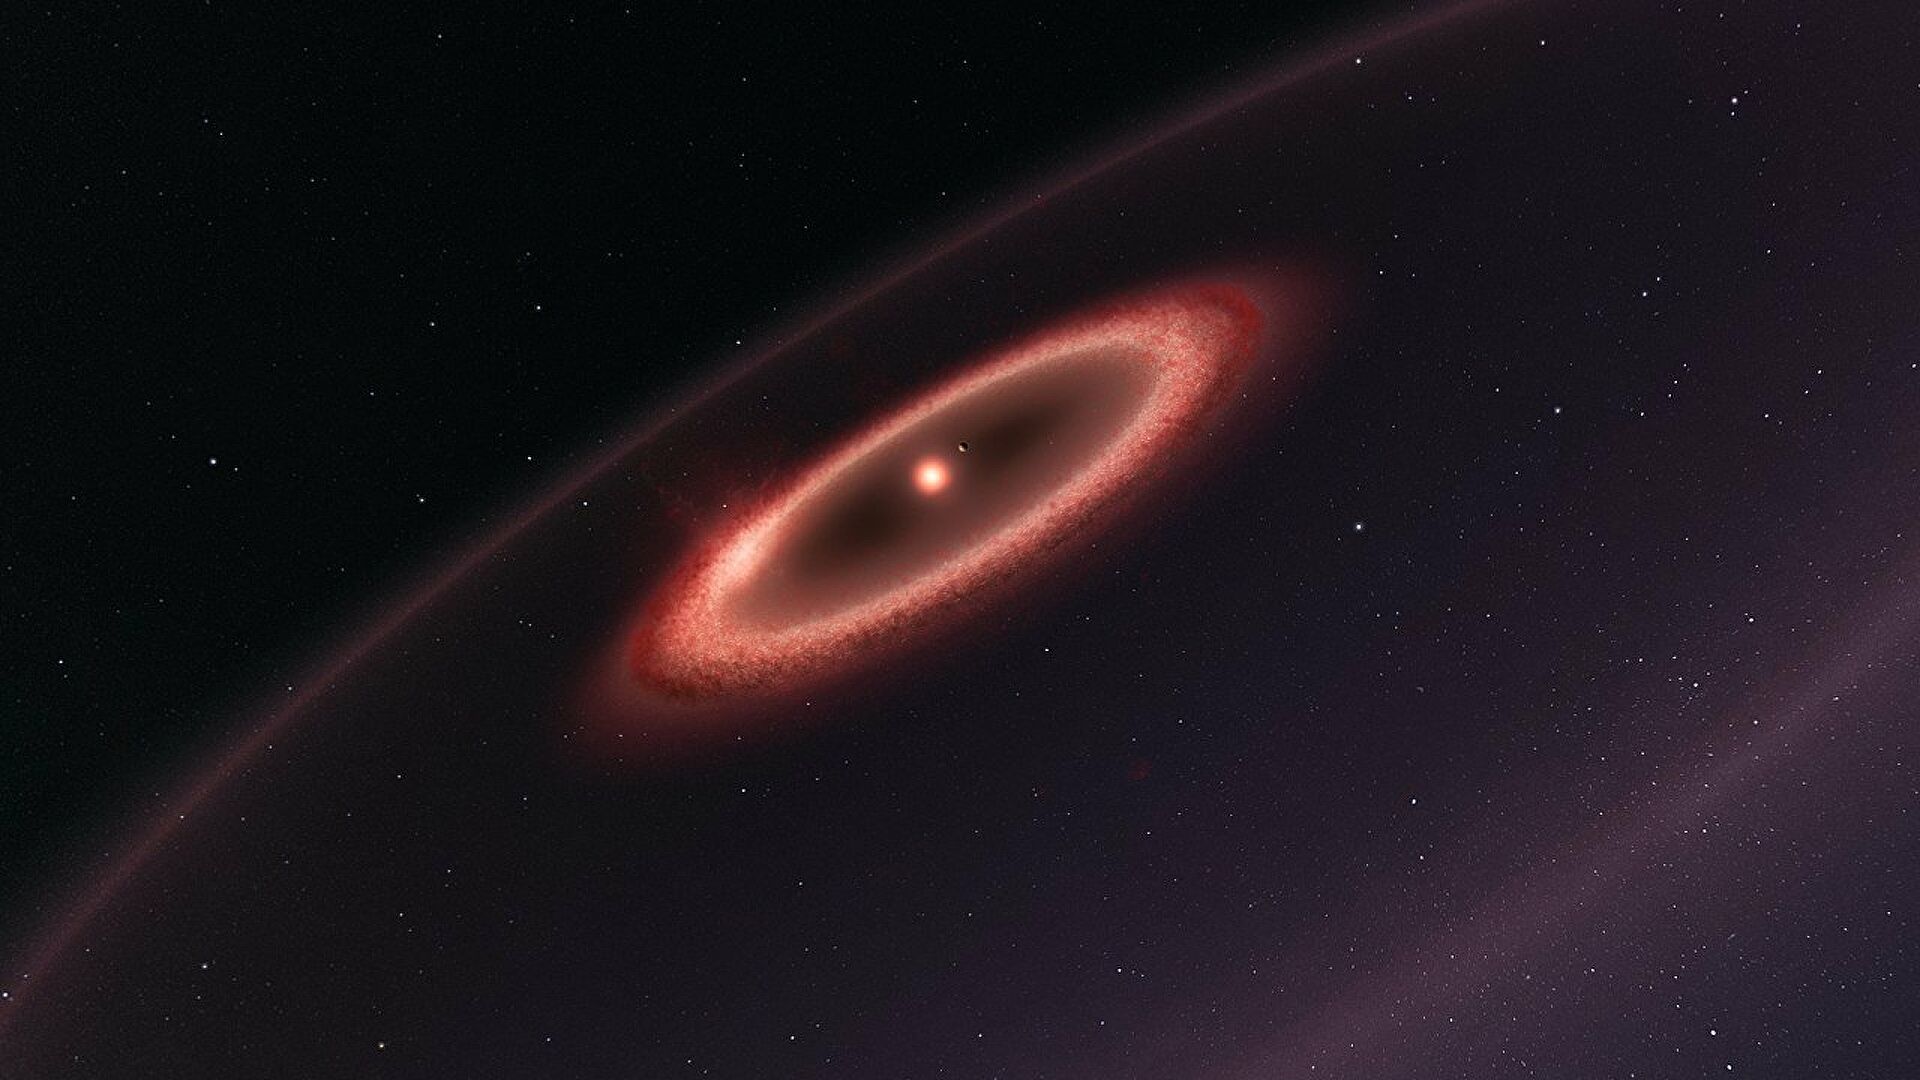 Artist's impression of the new exoplanet in Proxima Centauri. Credit: ESO/M. Kornmesser